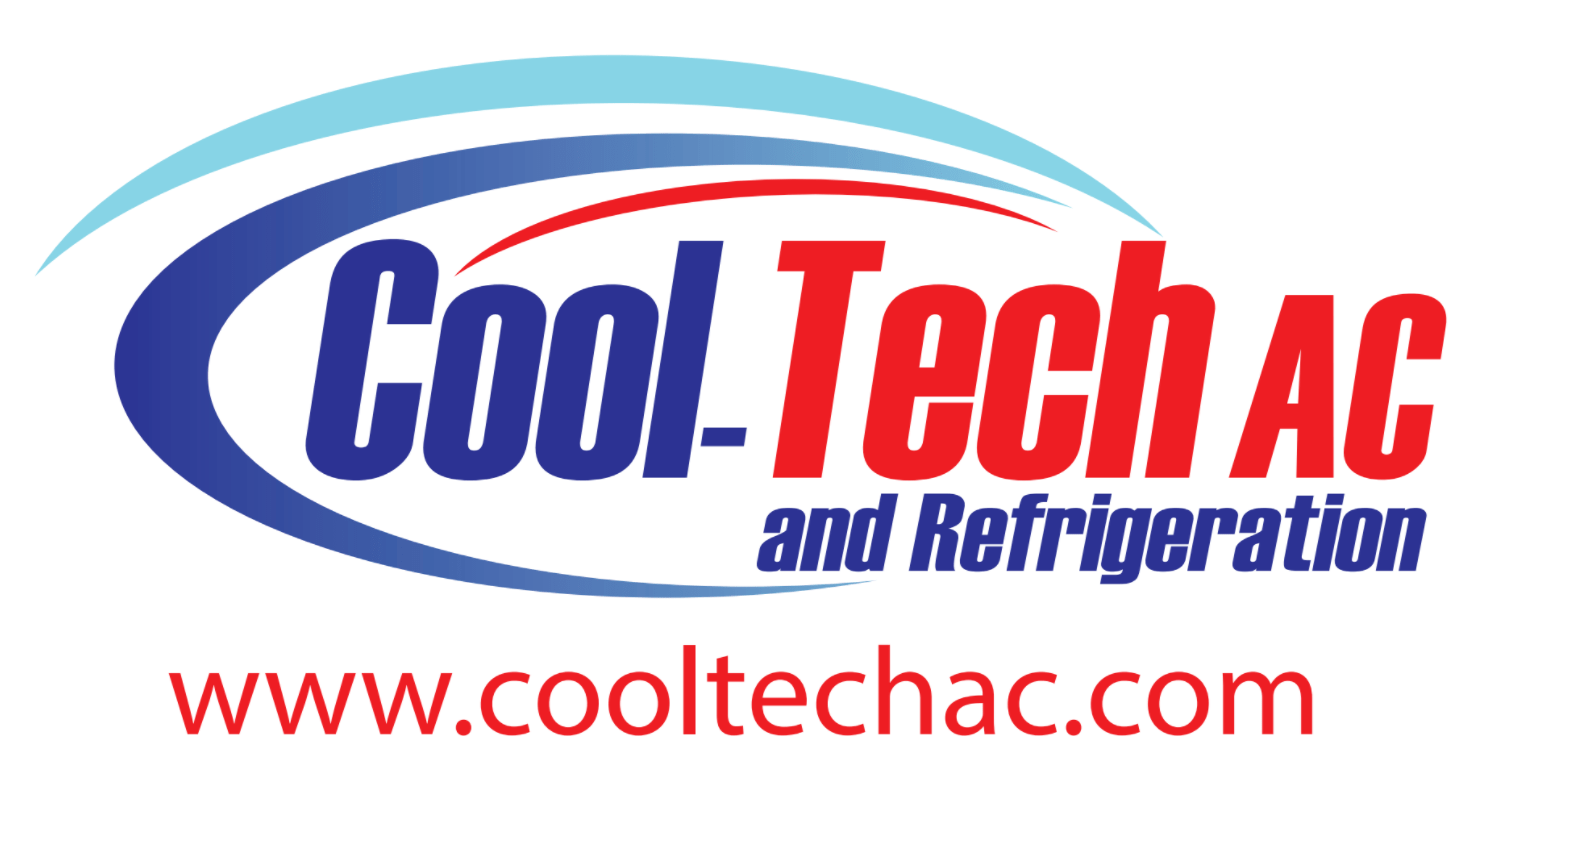 (c) Cooltechac.com